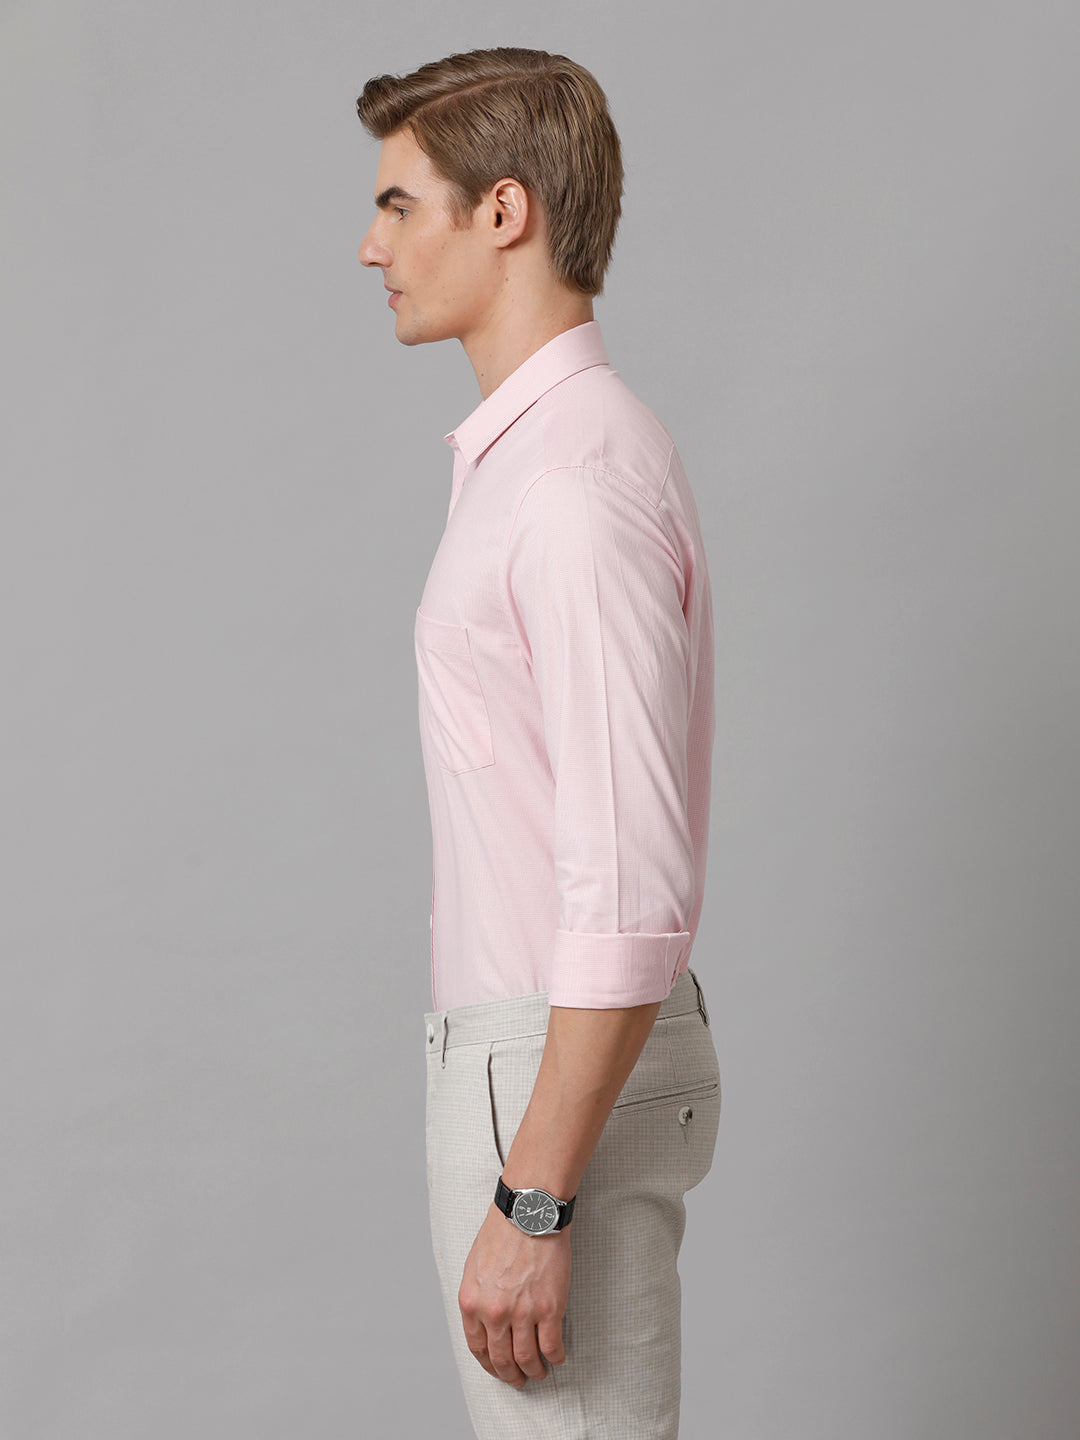 Aldeno Men Checkered Formal Pink Shirt (CAPEL)